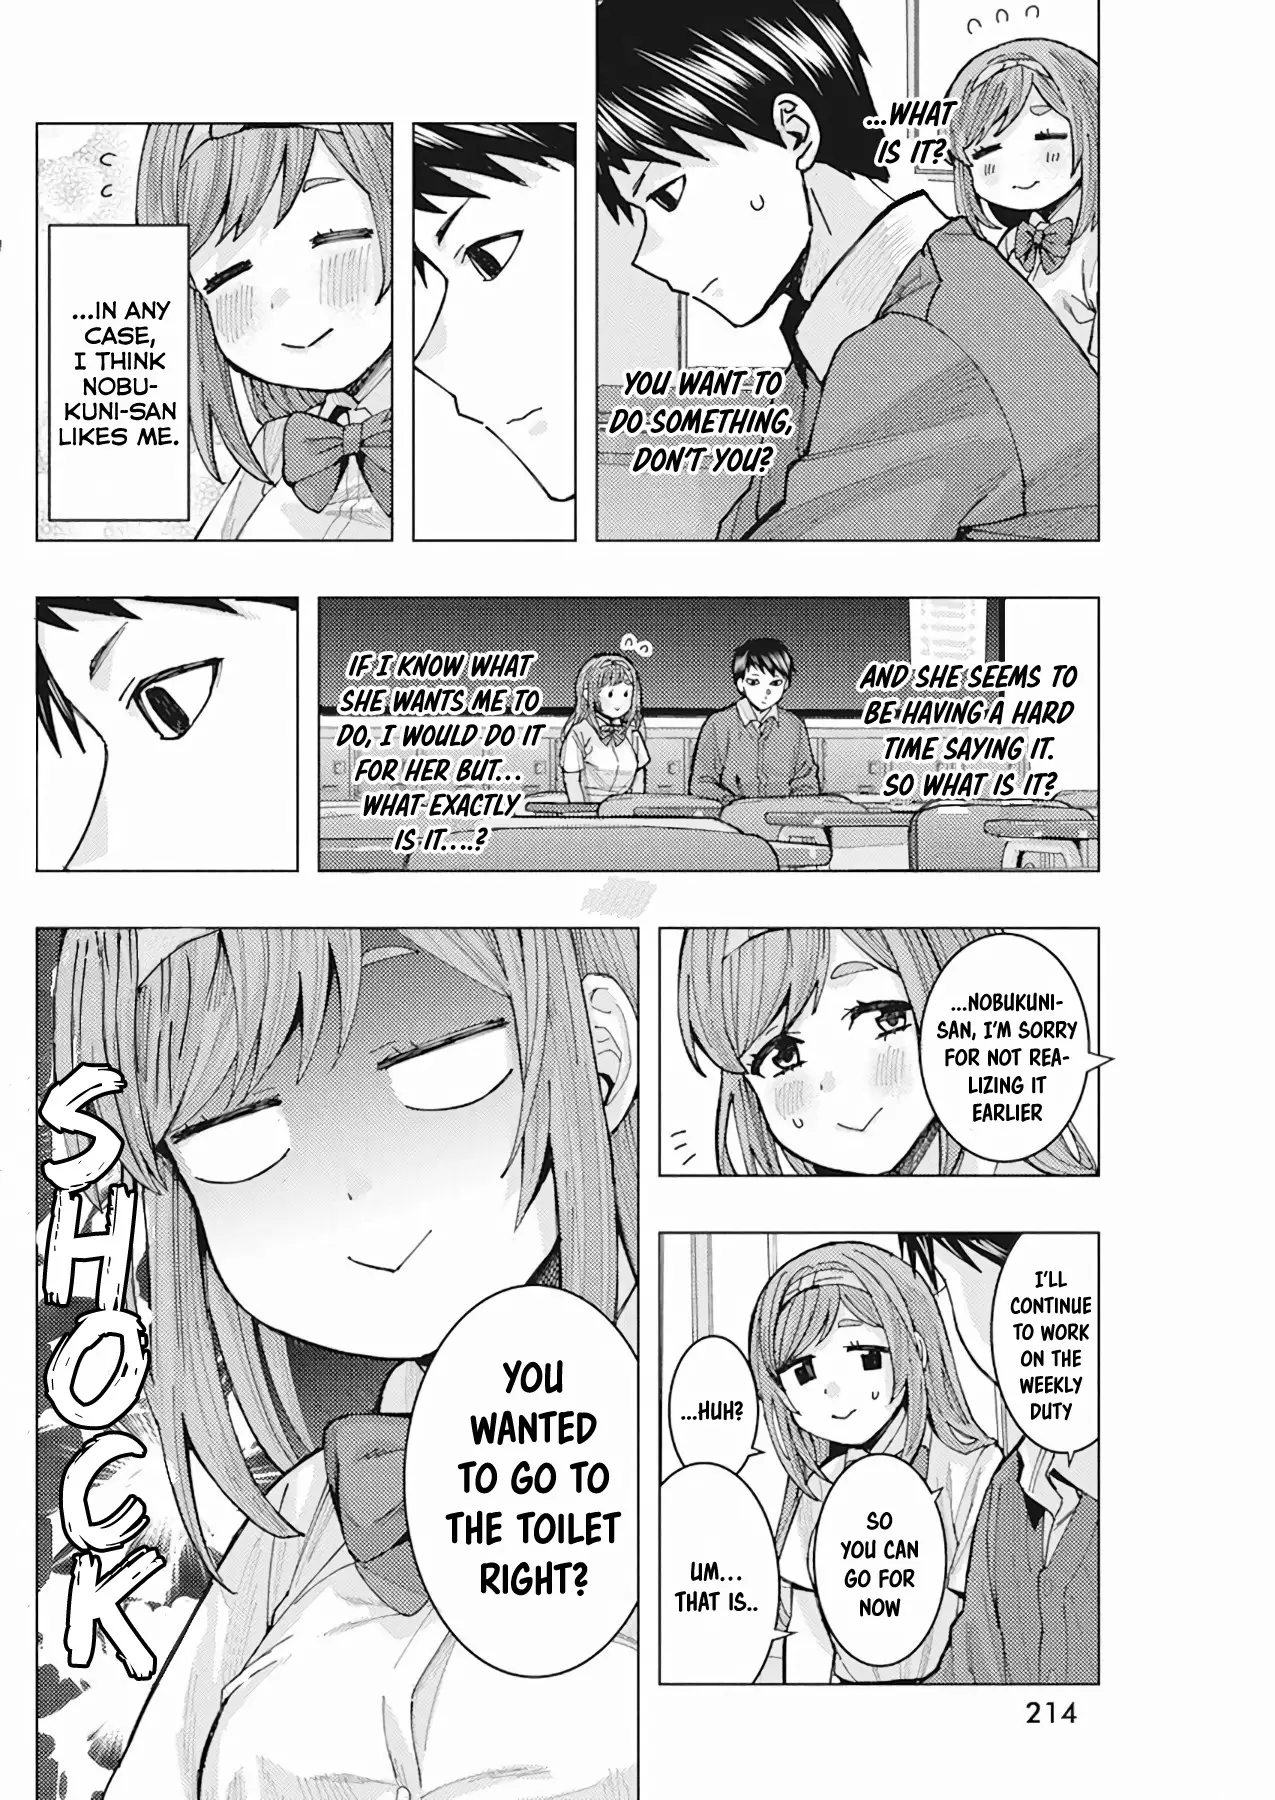 "nobukuni-San" Does She Like Me? - 6 page 6